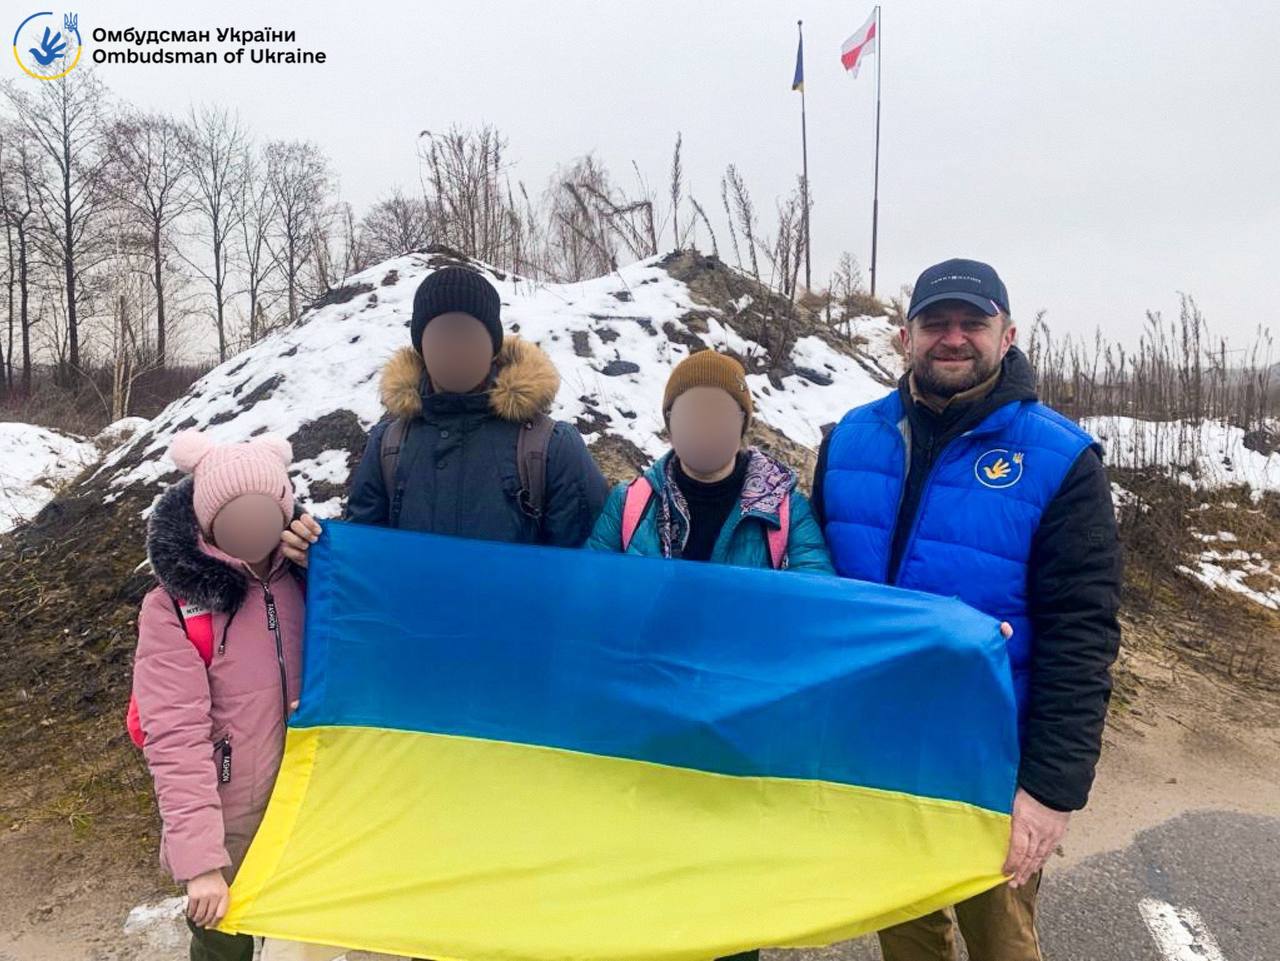 Three Ukrainian children returned from Russia, occupied territories